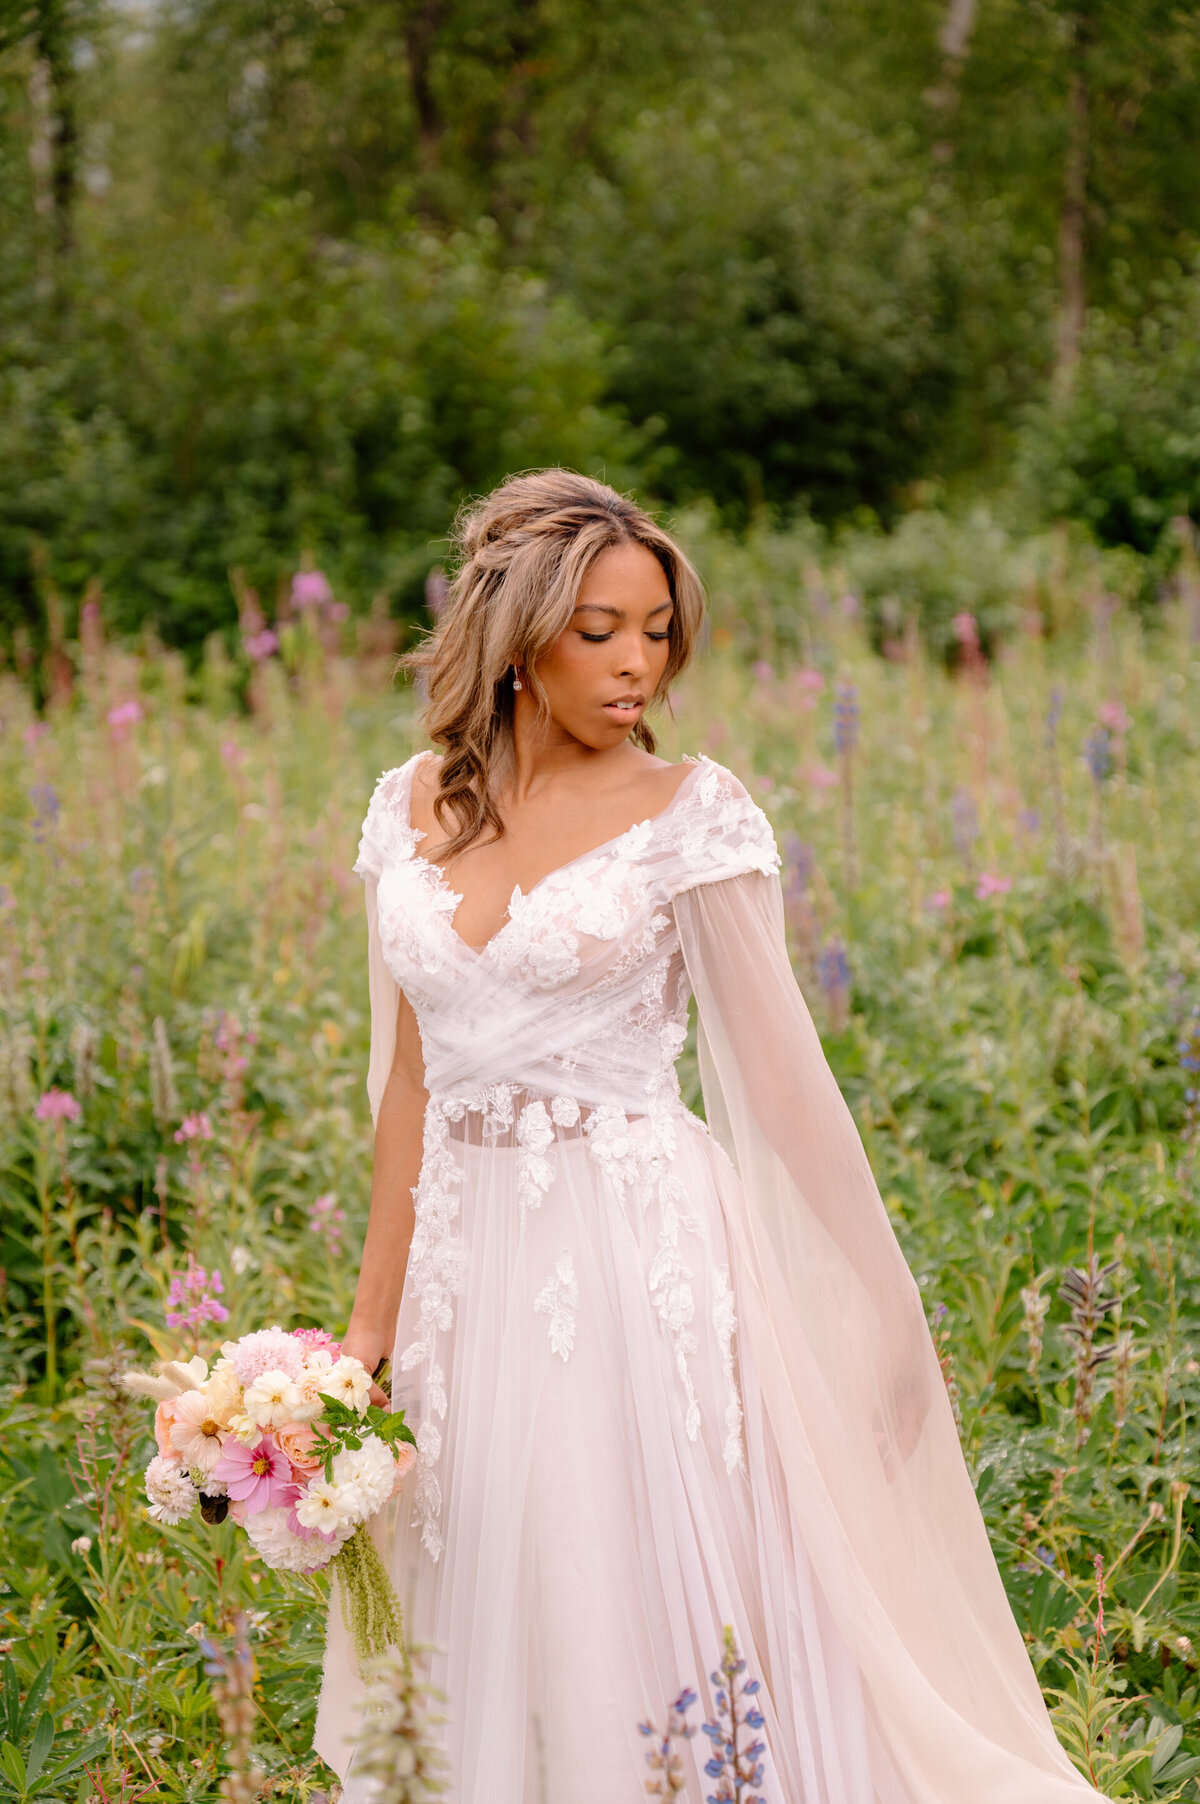 portrait of bride in a wedding gown